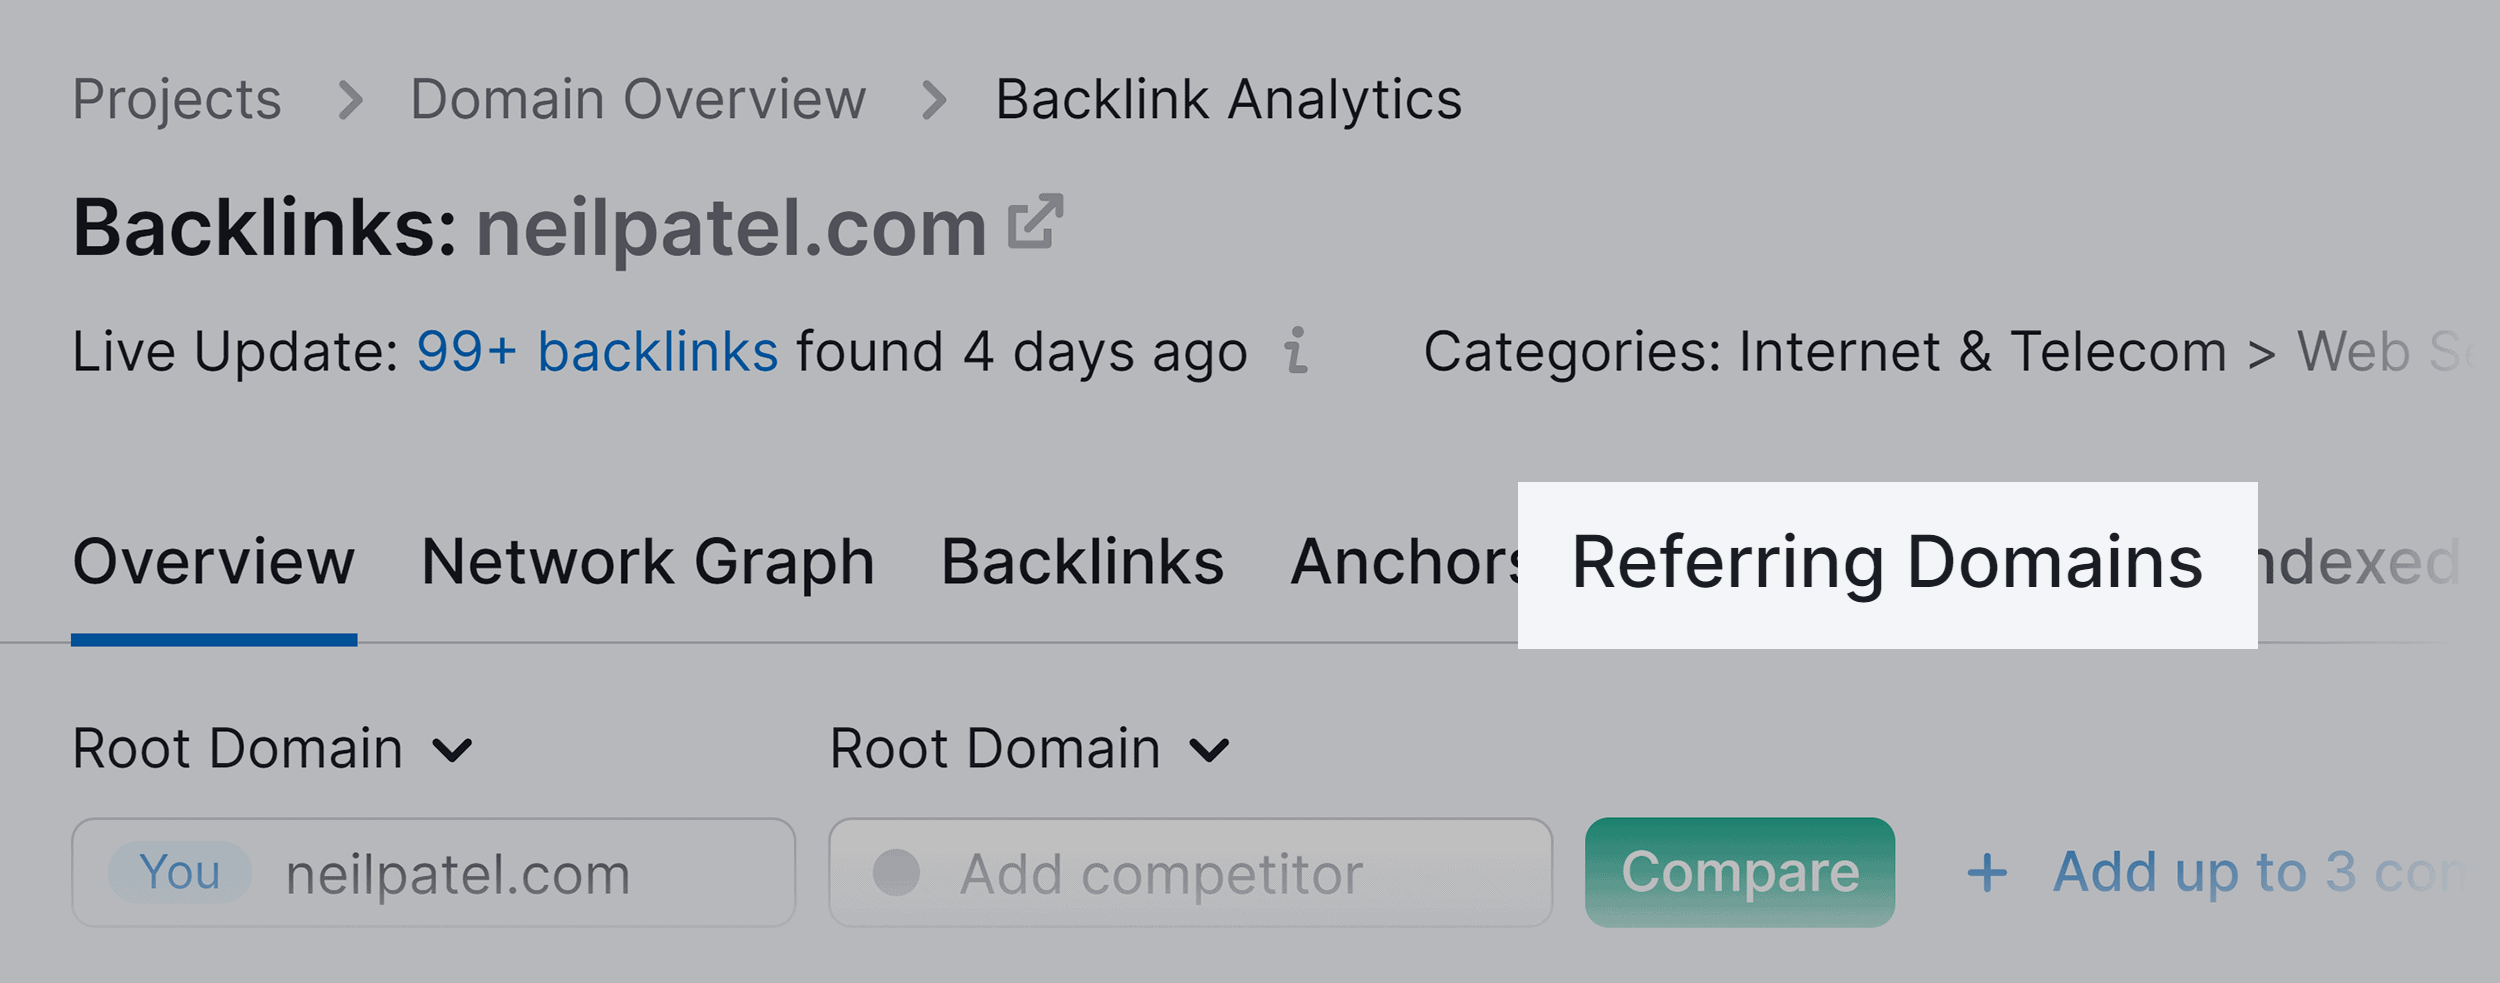 Backlink Analytics – Referring domains